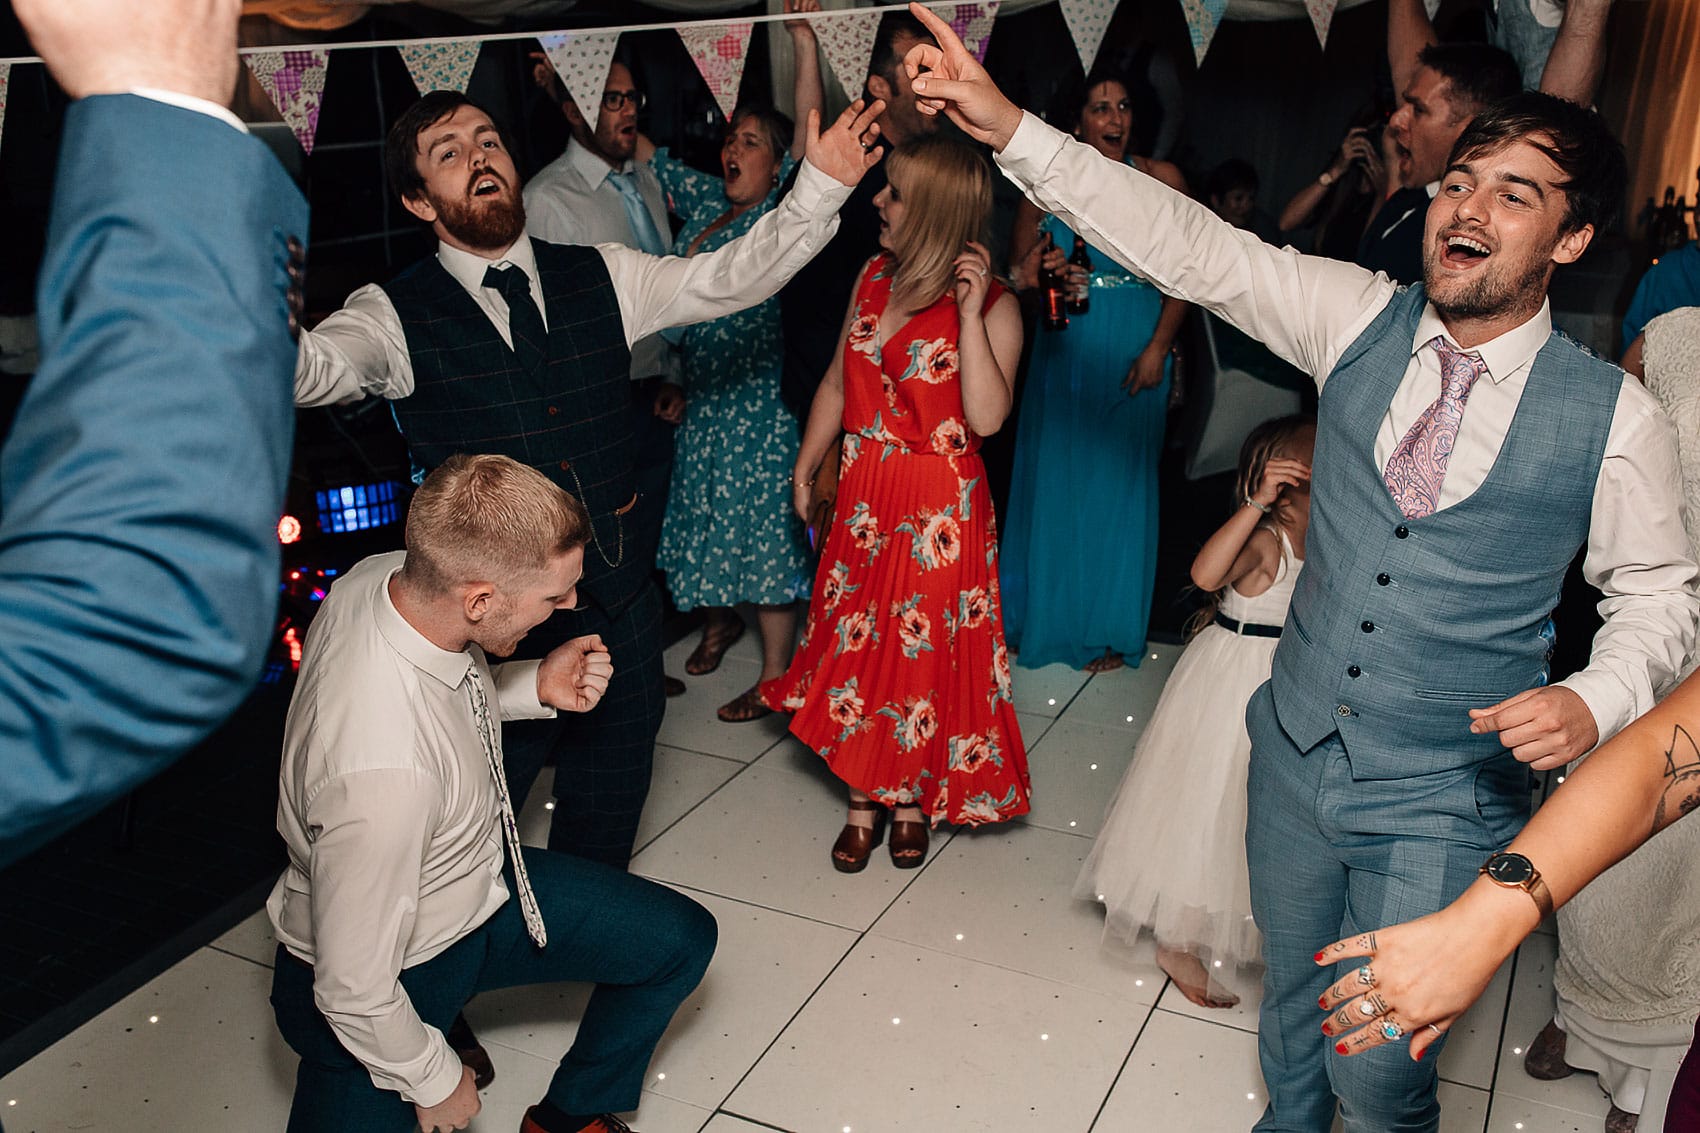 North Yorkshire barn wedding dance-floor